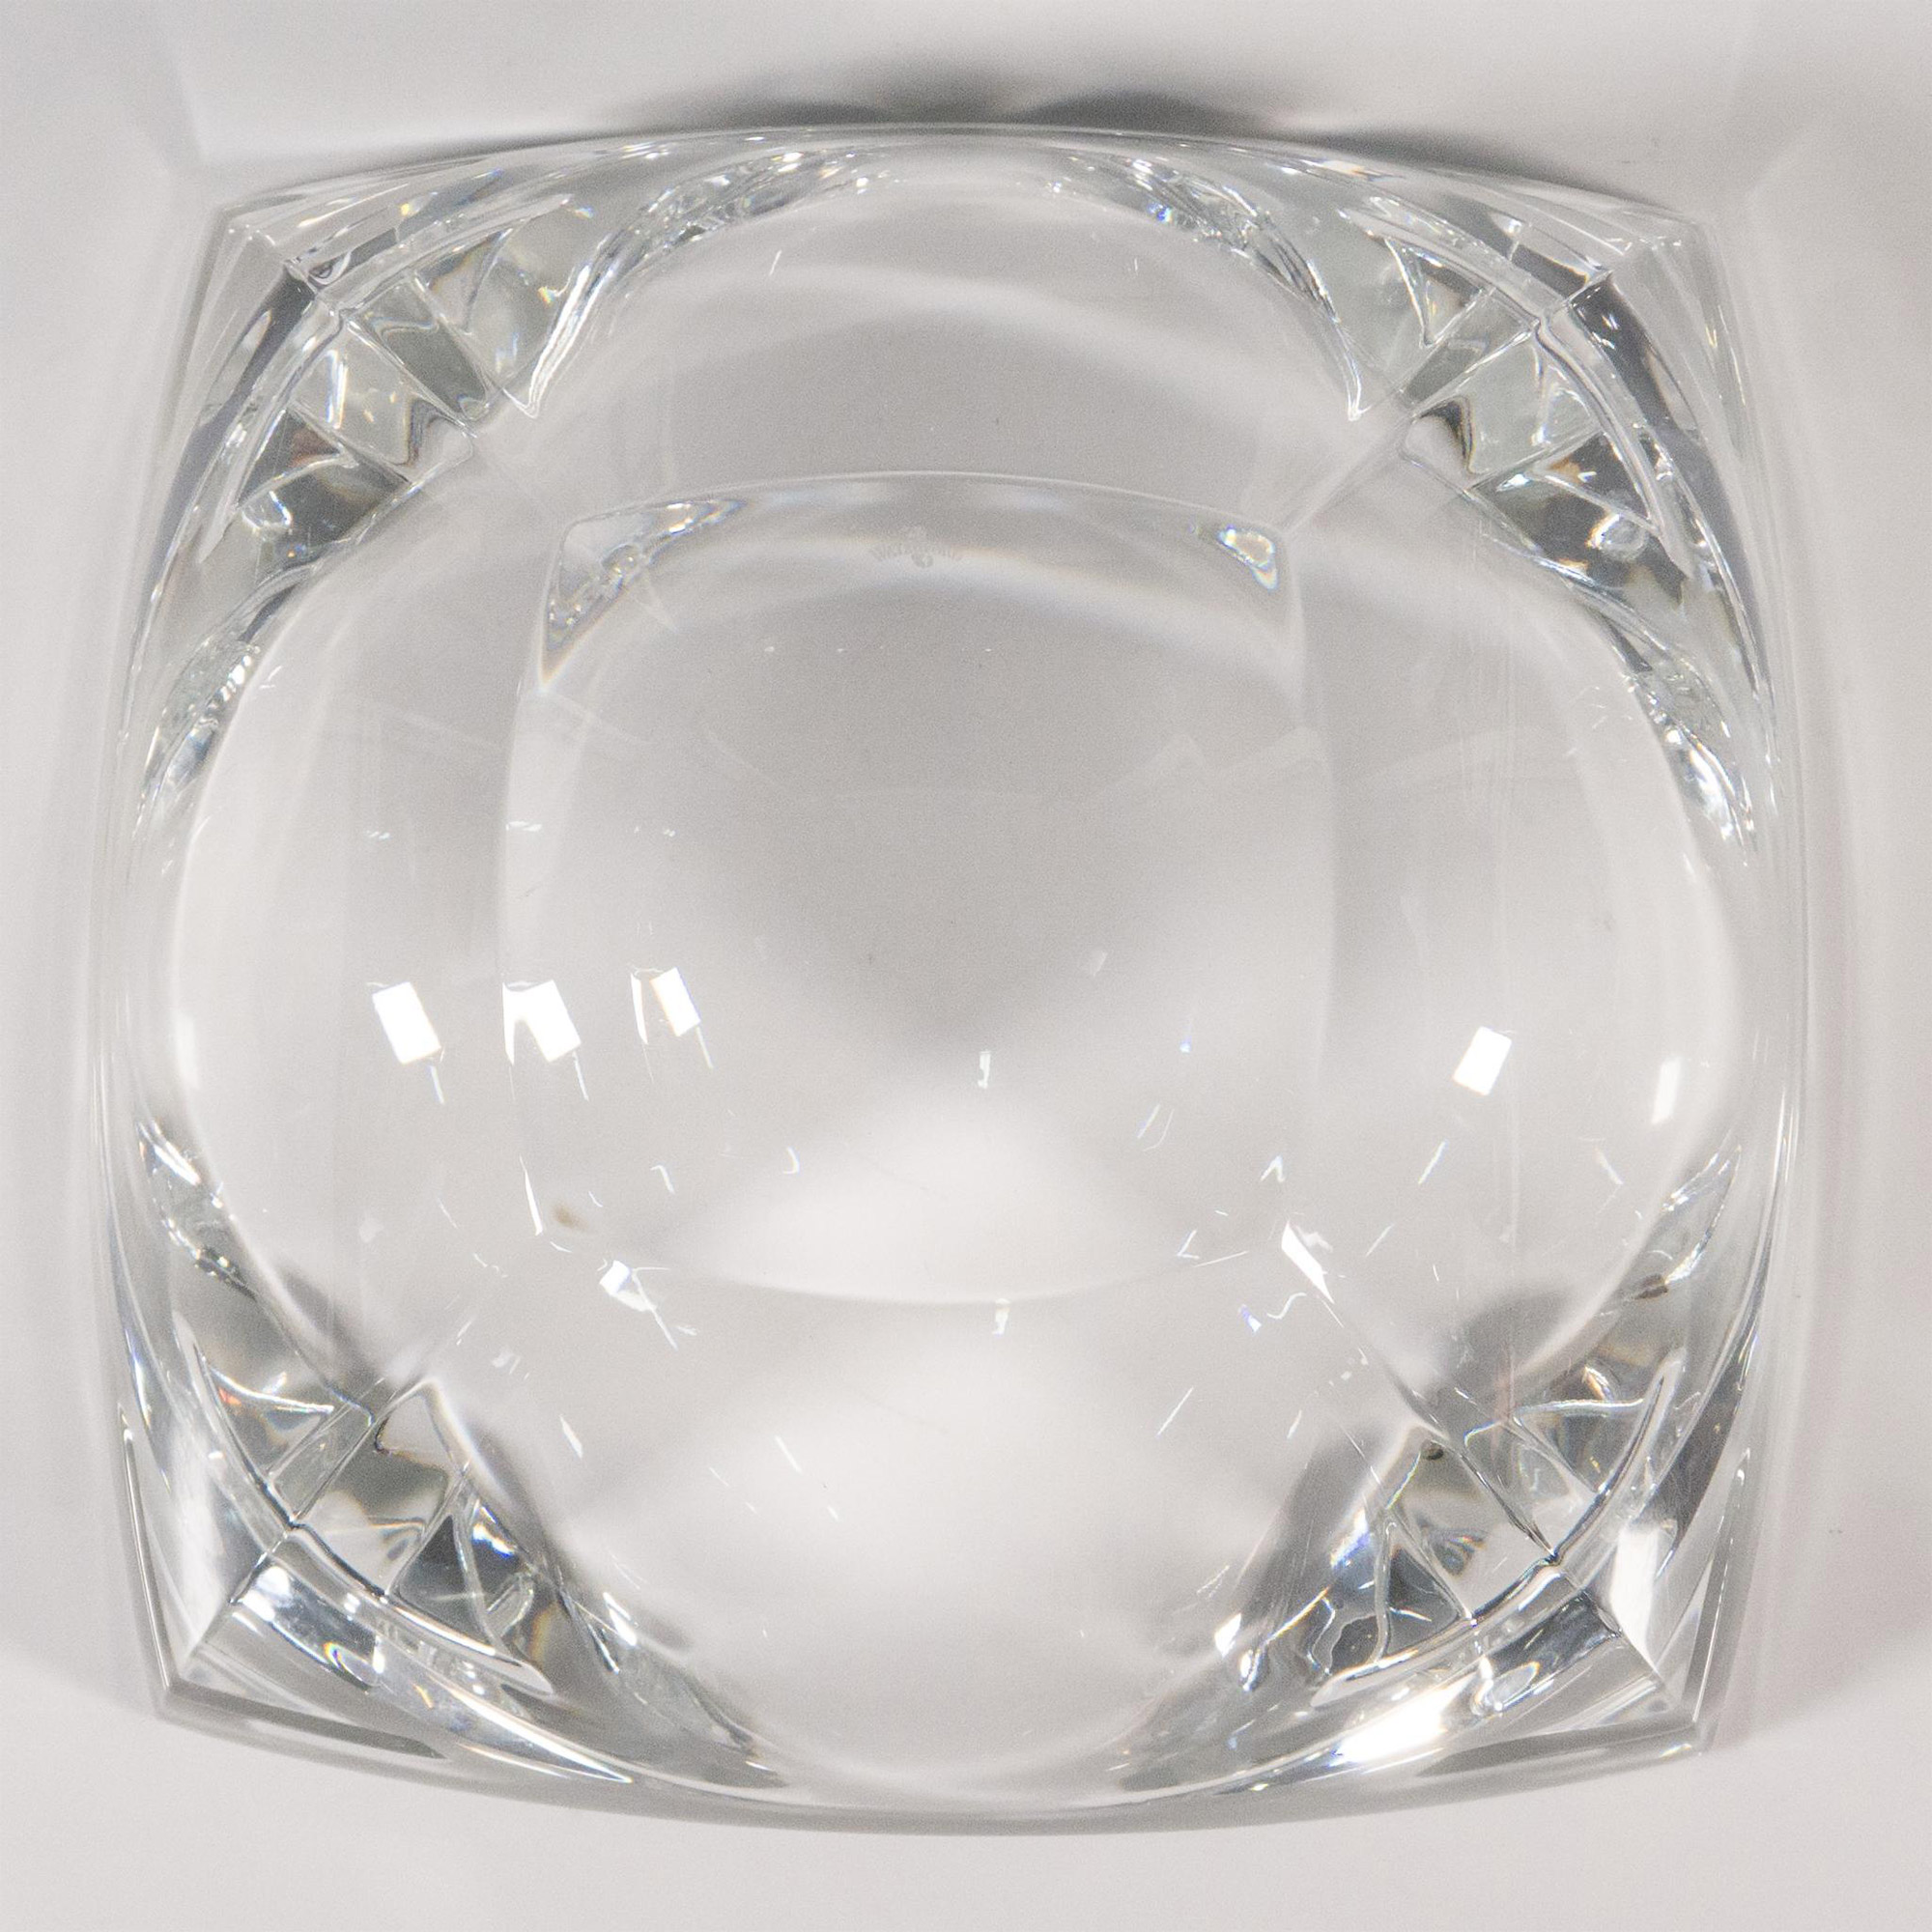 Waterford Crystal Square Bowl, Metra - Image 2 of 2